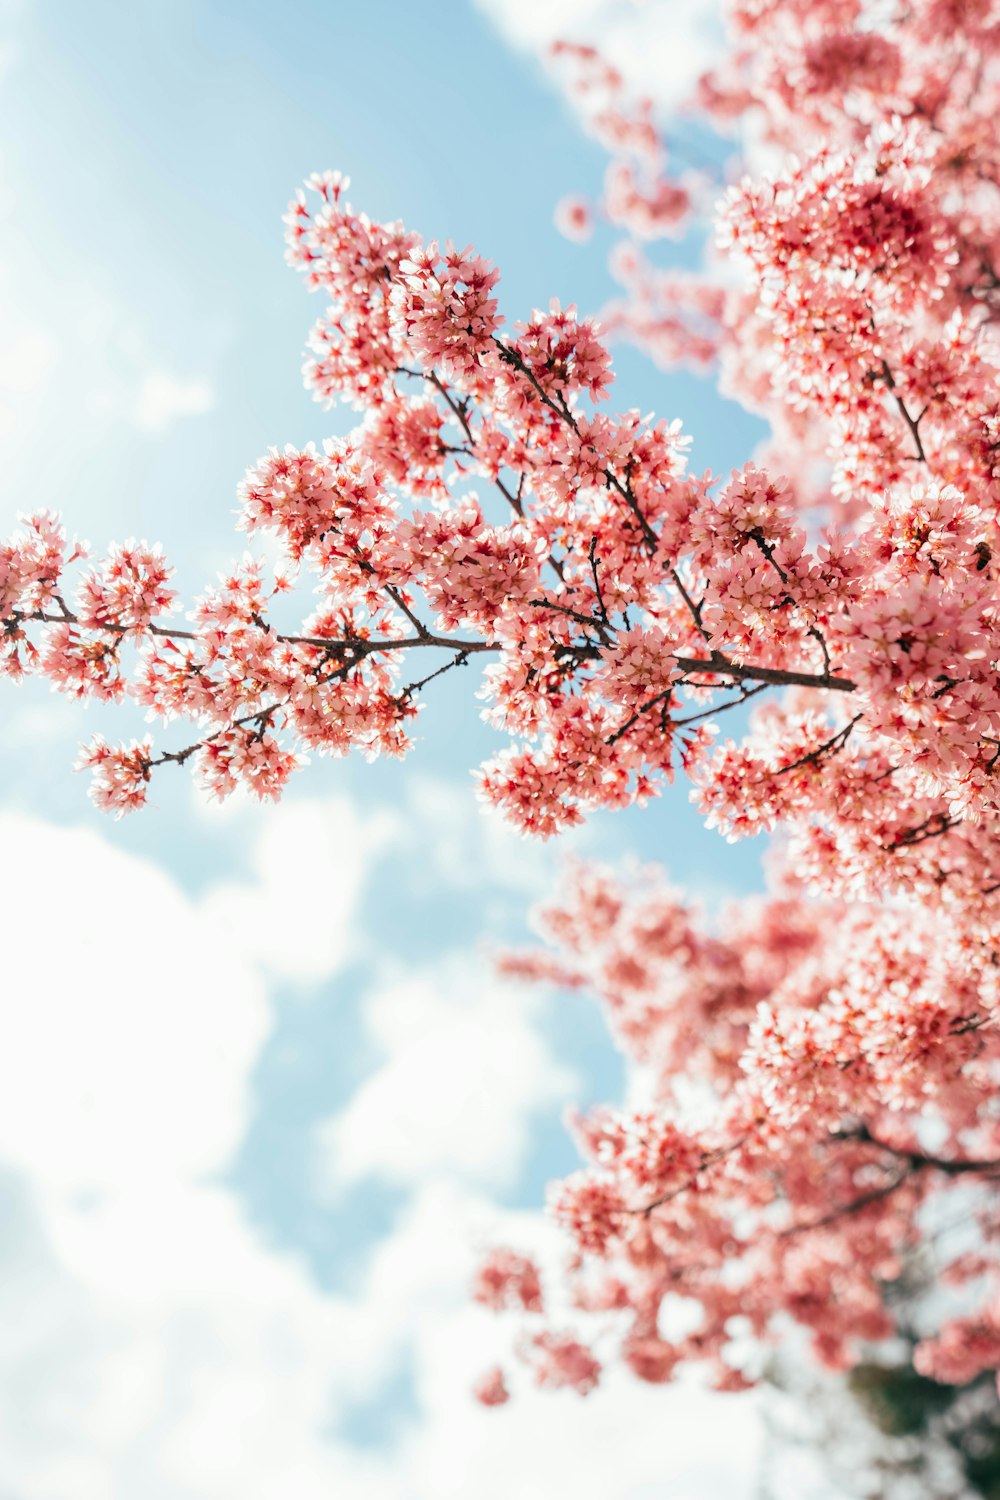 pink cherry blossom tree under white clouds blue skies daytime